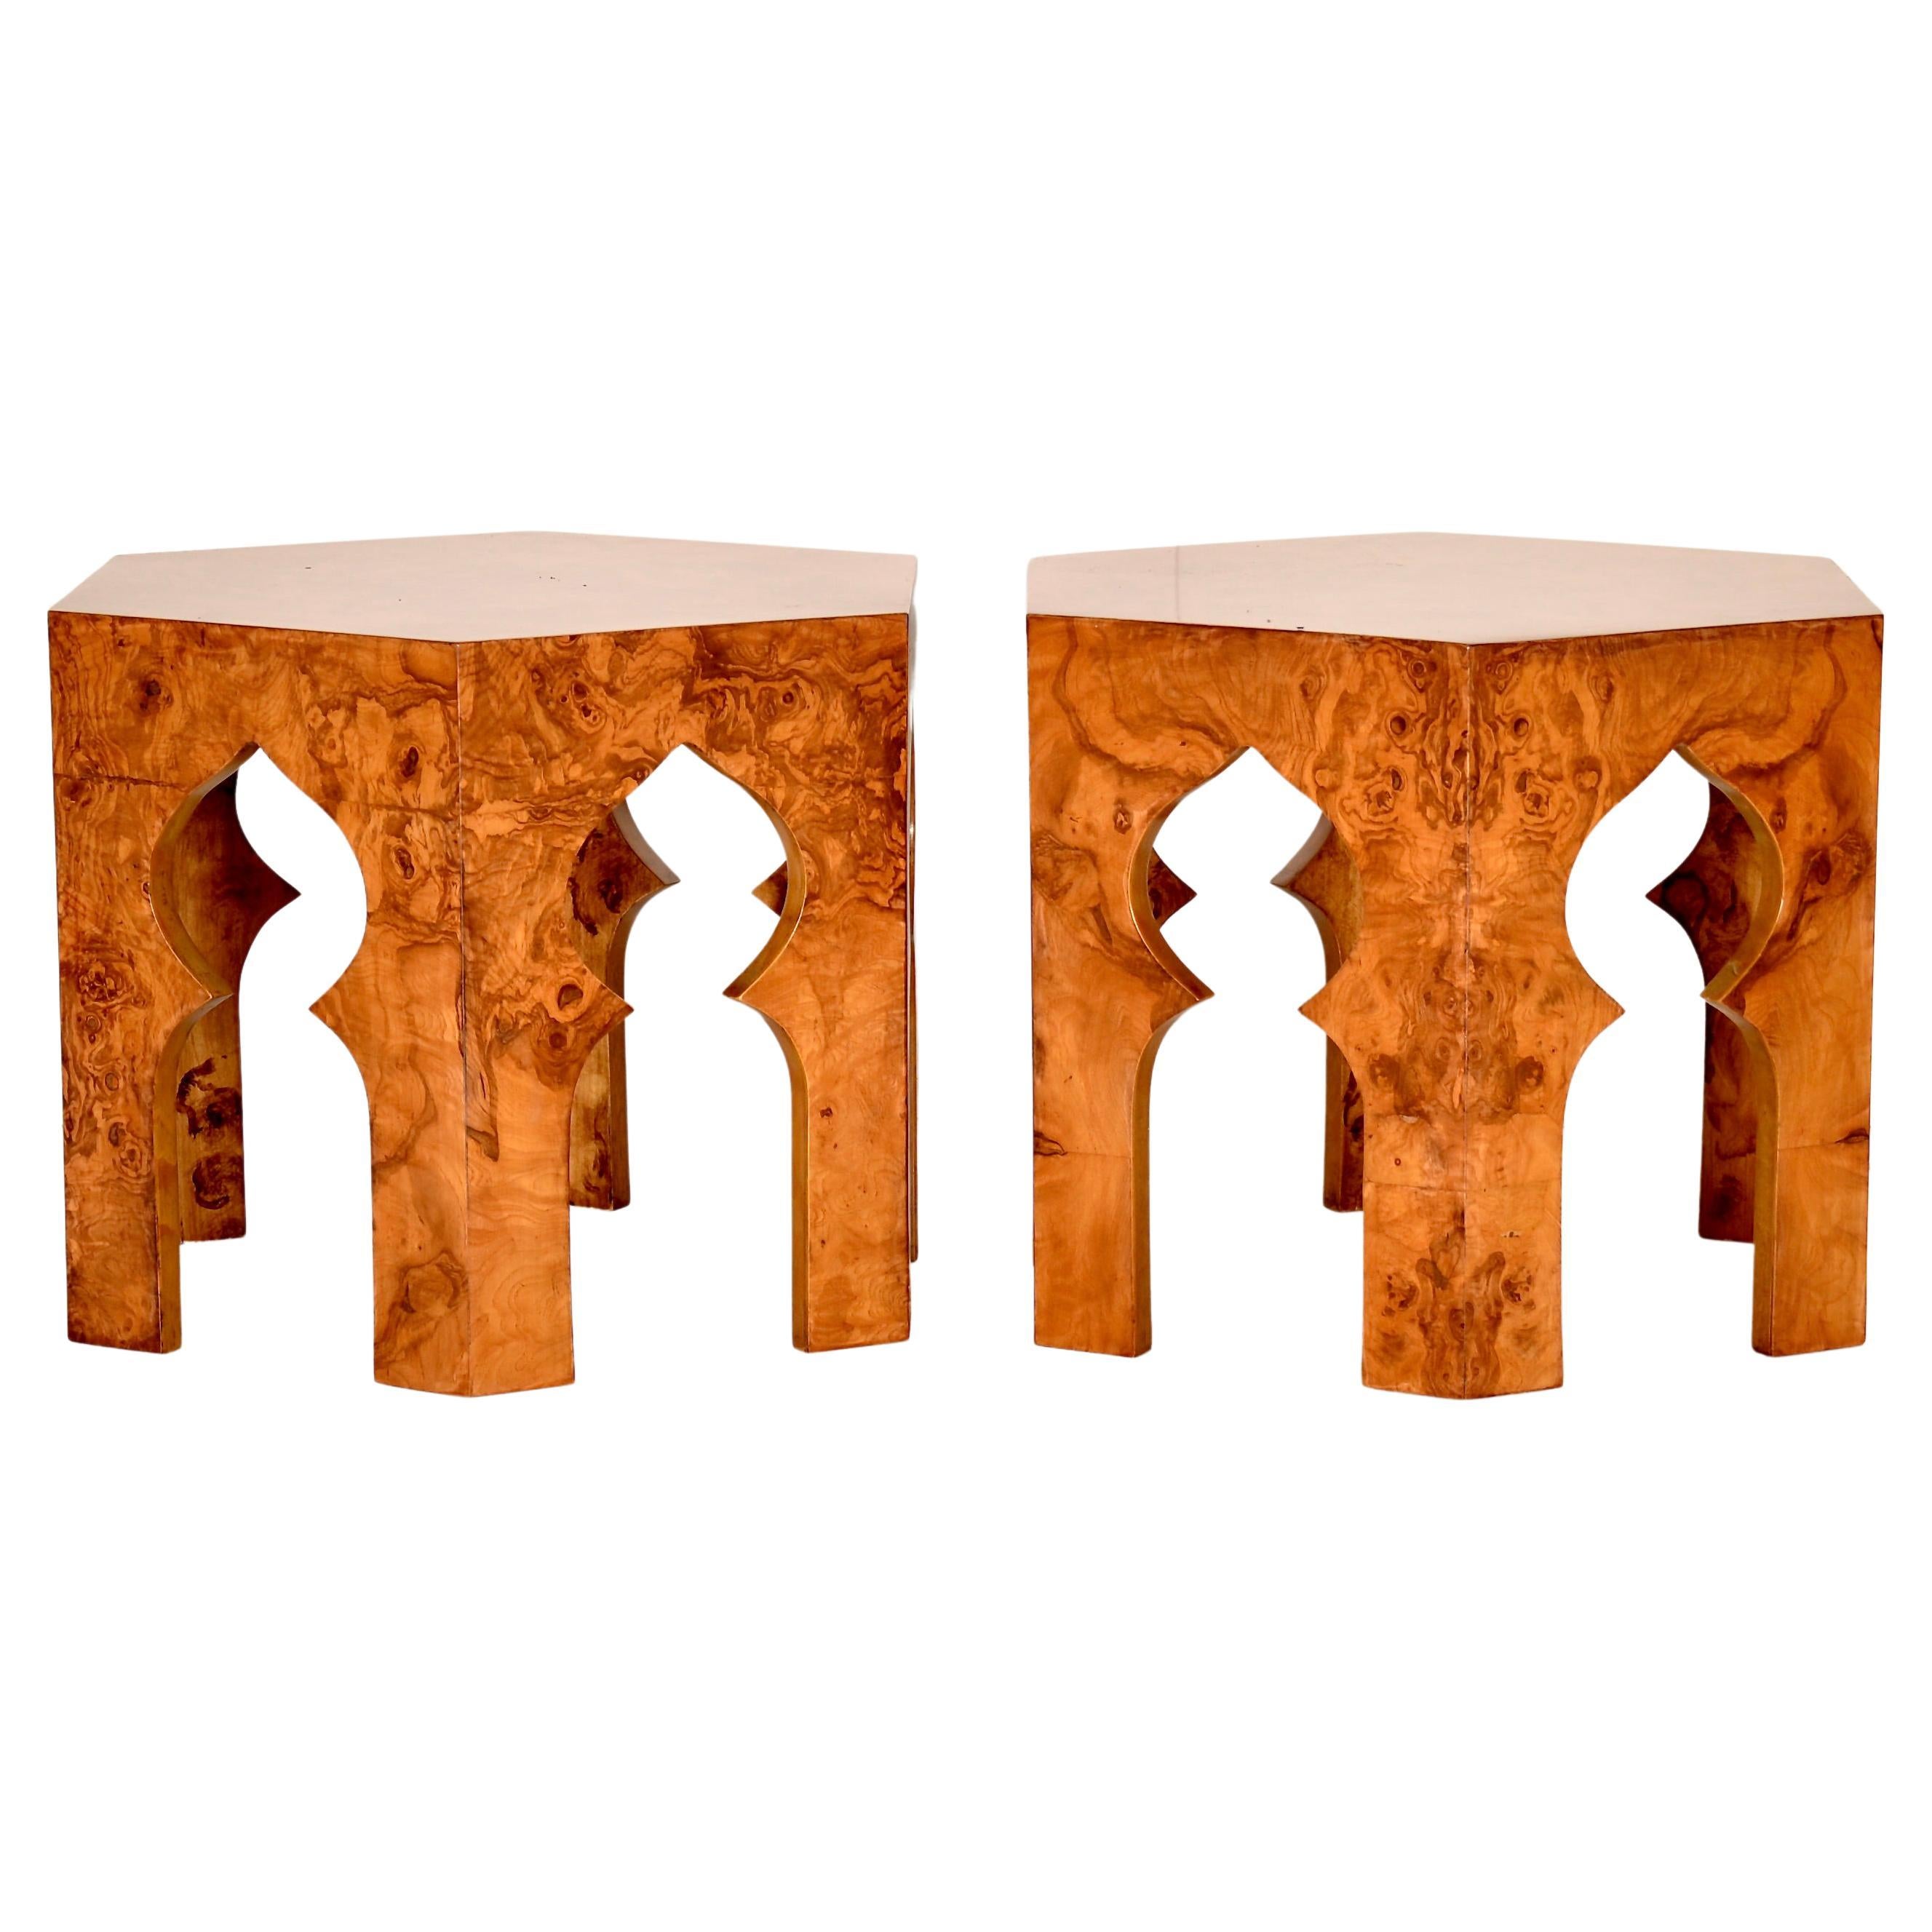 Pair of Burl Wood Occasional Tables in Moroccan Motif